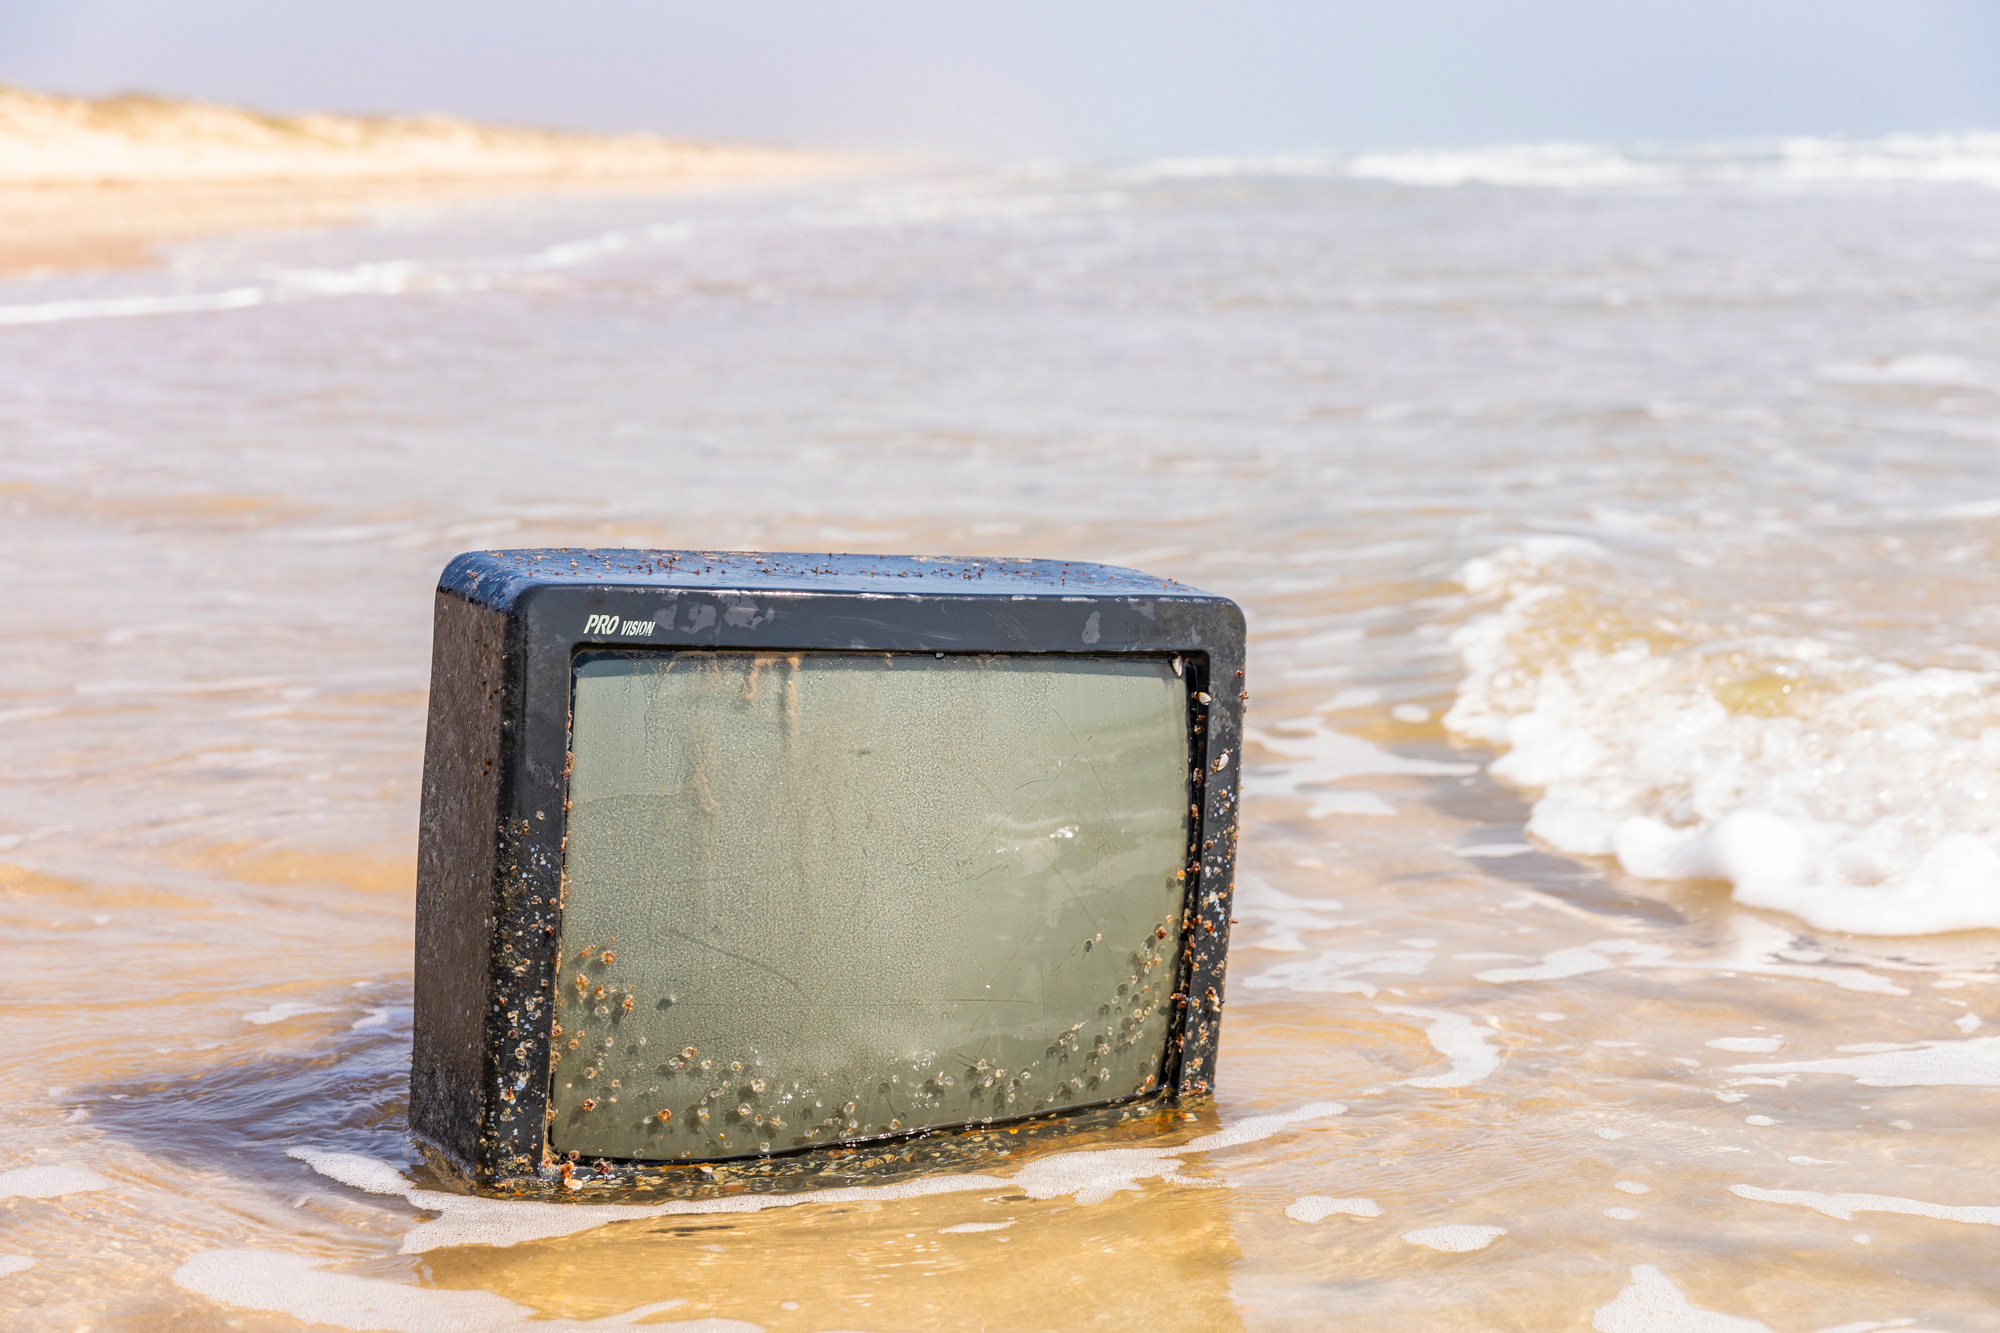 Washed up television on Padre Island National Seashore